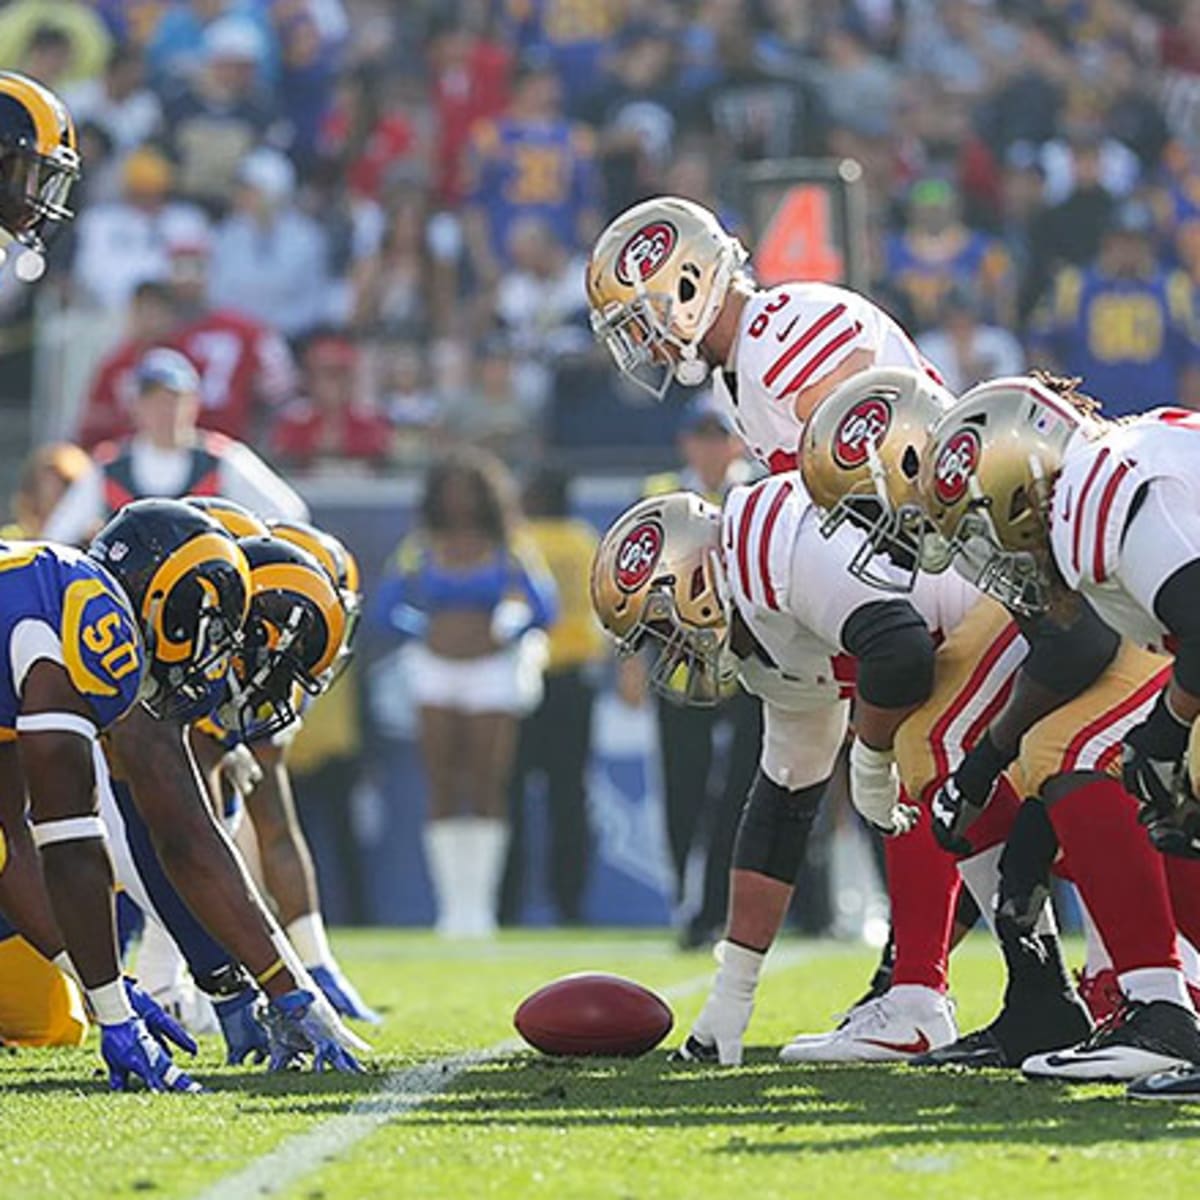 5 Greatest Los Angeles Rams vs. San Francisco 49ers Games 